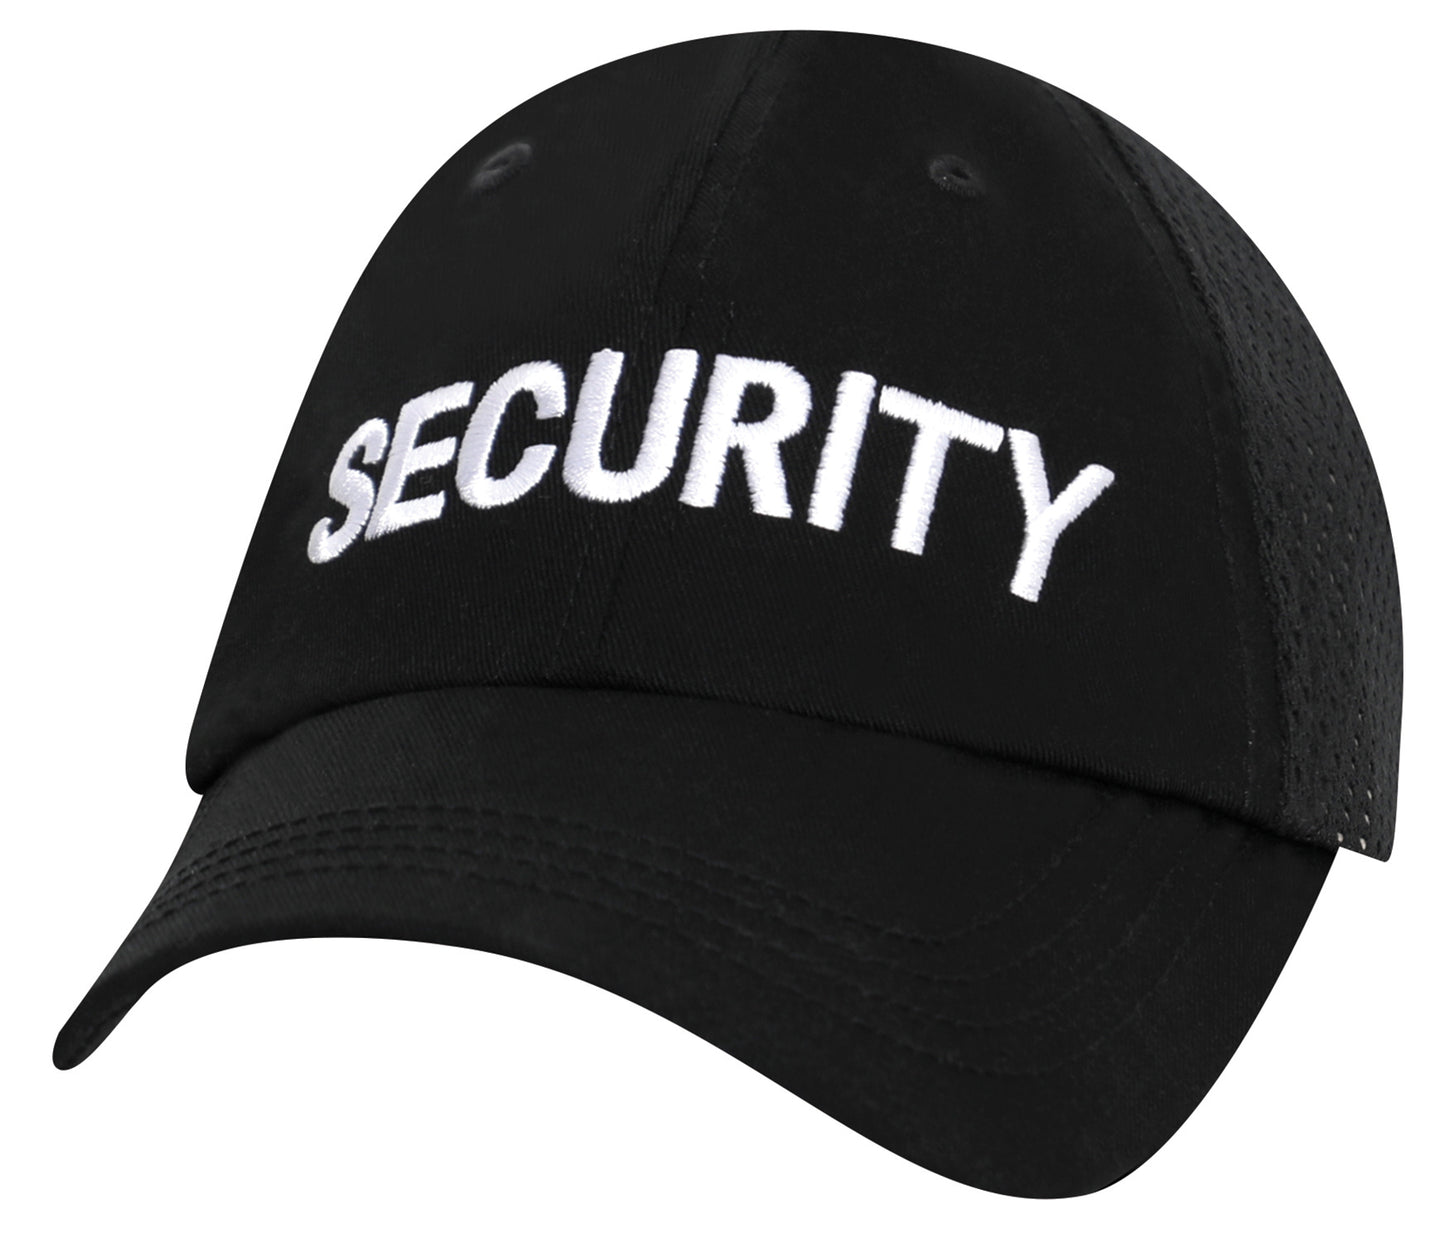 Wild West Security Mesh Back Tactical Cap - Black